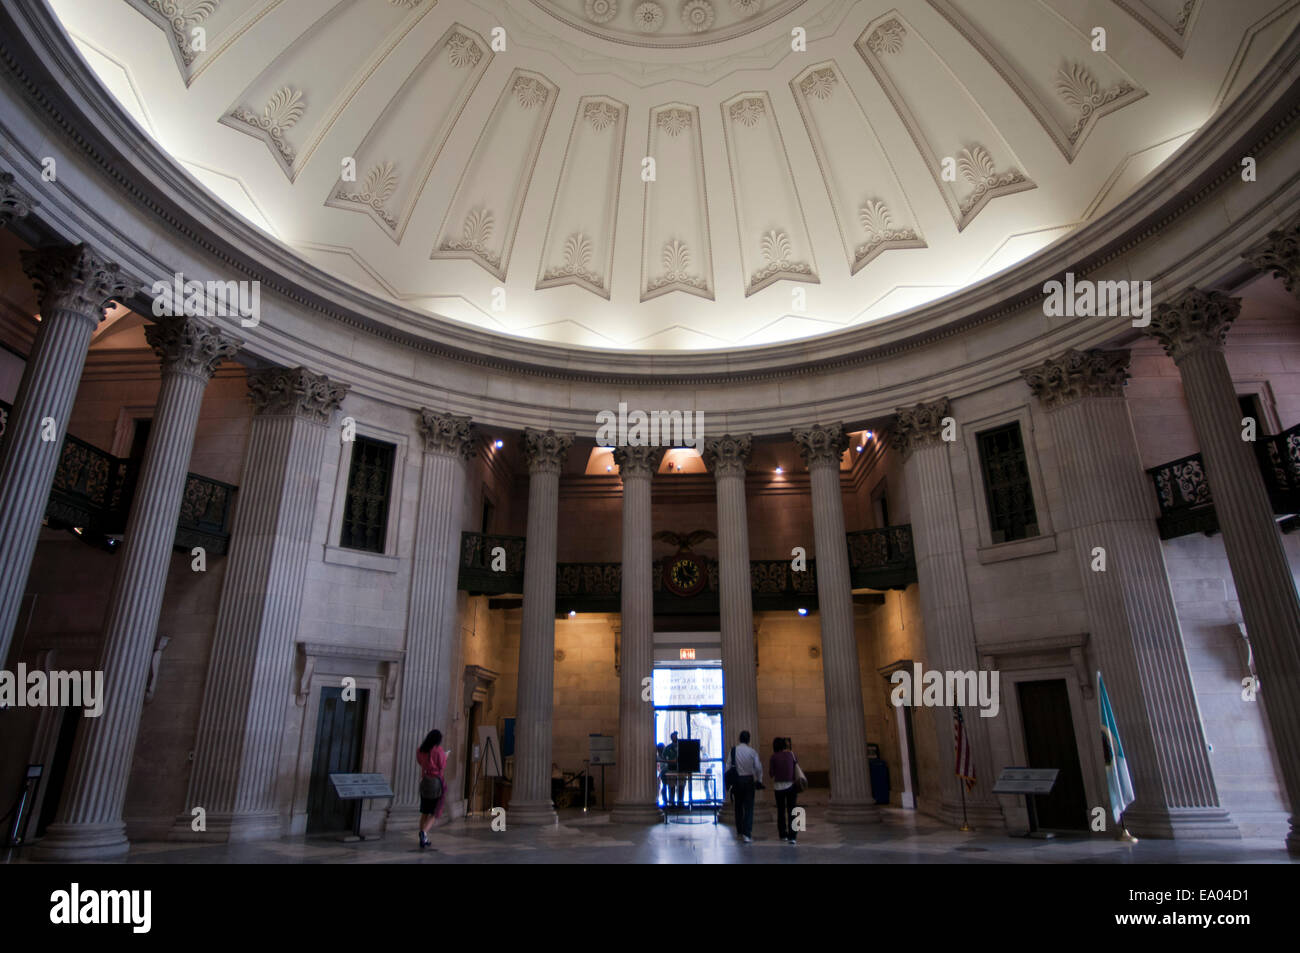 Inside Federal Hall. New York. Manhattan. Federal Hall National Memorial Rotunda, New York. NY. USA. Federal Hall, built in 1700 Stock Photo